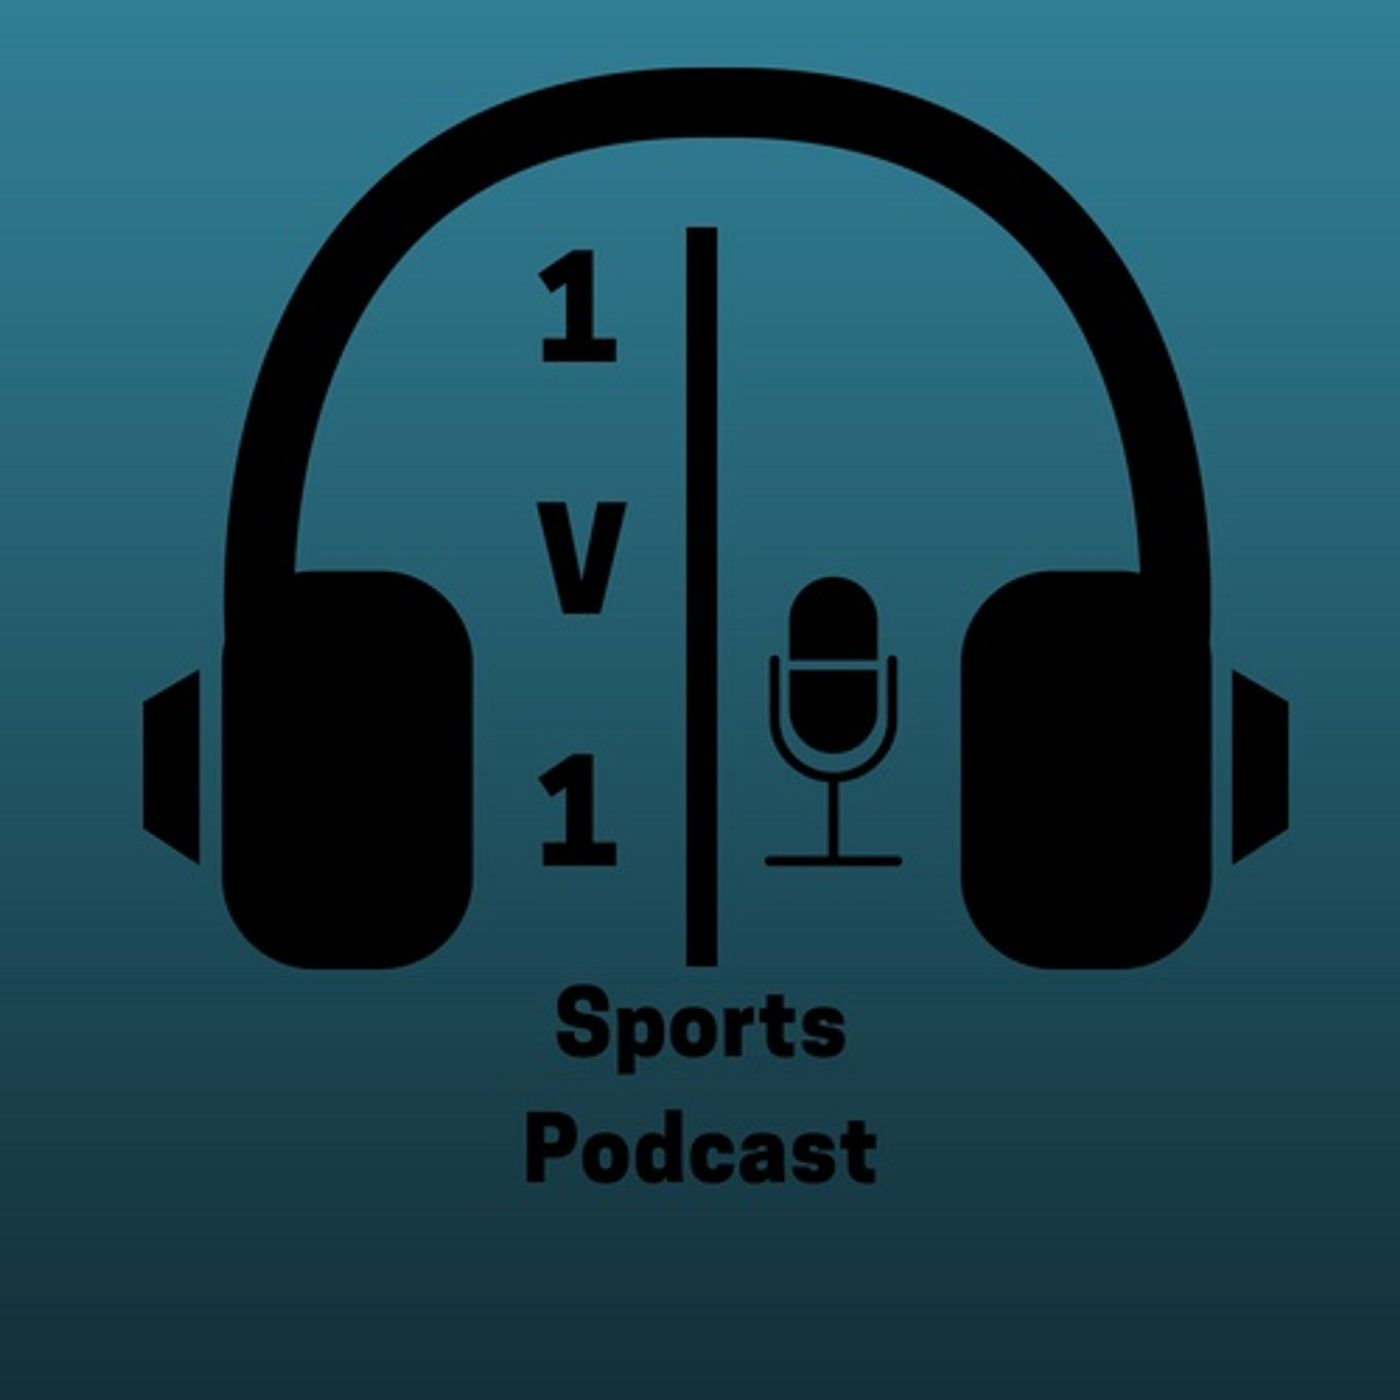 1 V 1 Sports Podcast